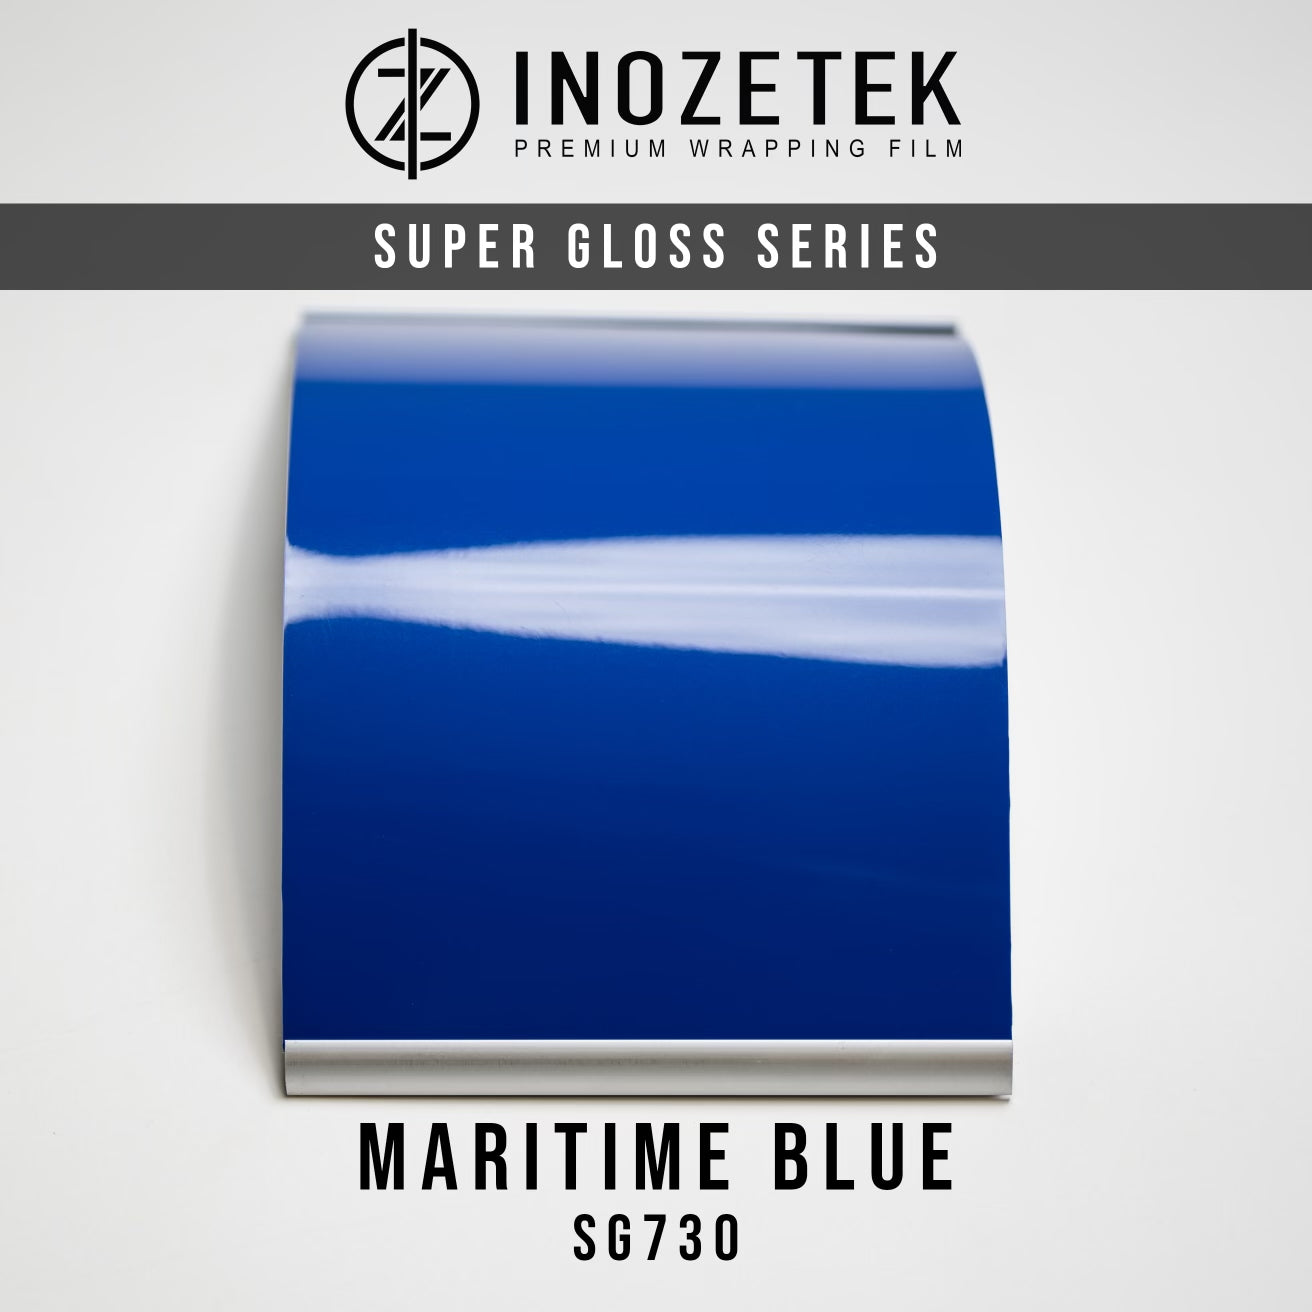 Super Gloss Maritime Blue - Inozetek USA